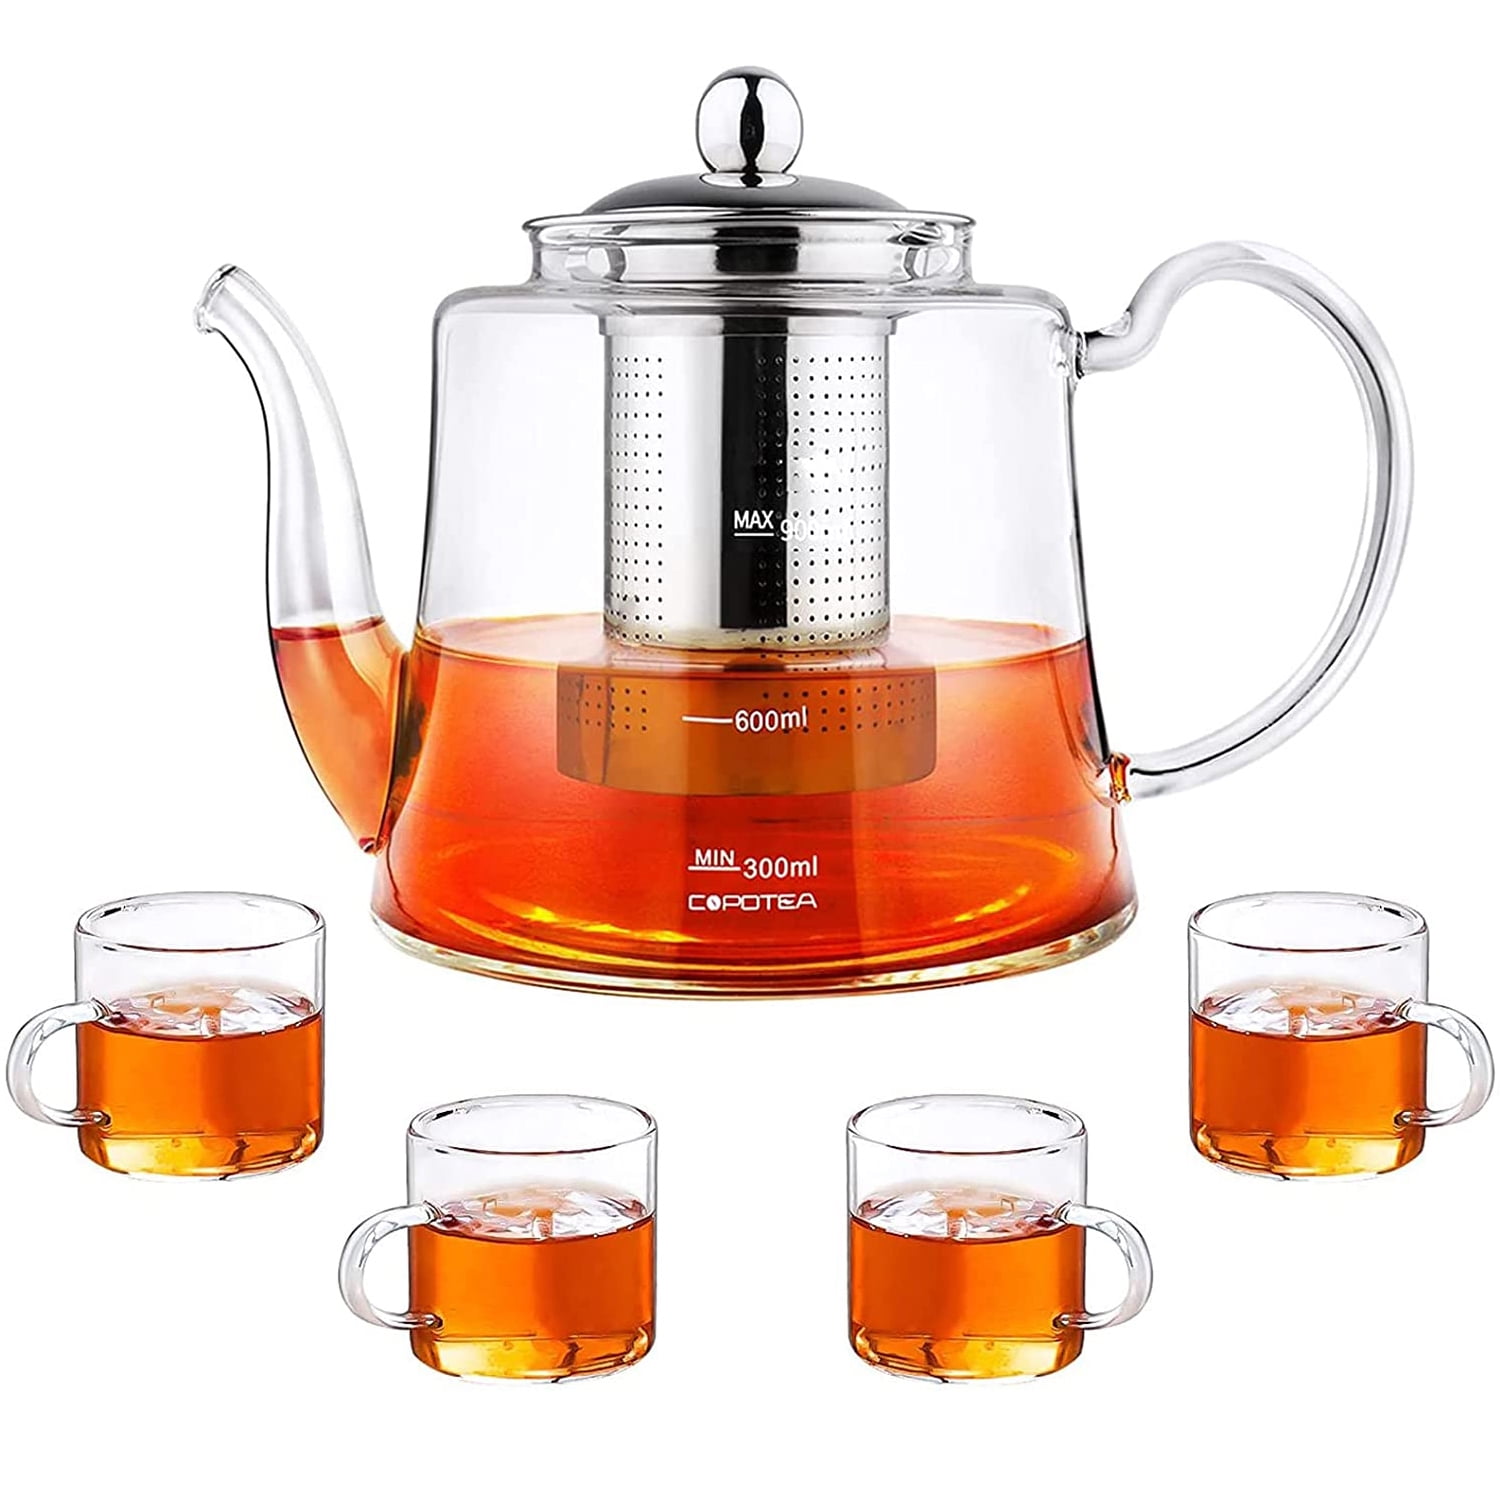 Borosilicate Glass Teapot Tea Maker Pot with Basket Infuser 1200ML c/w 4 Cups 